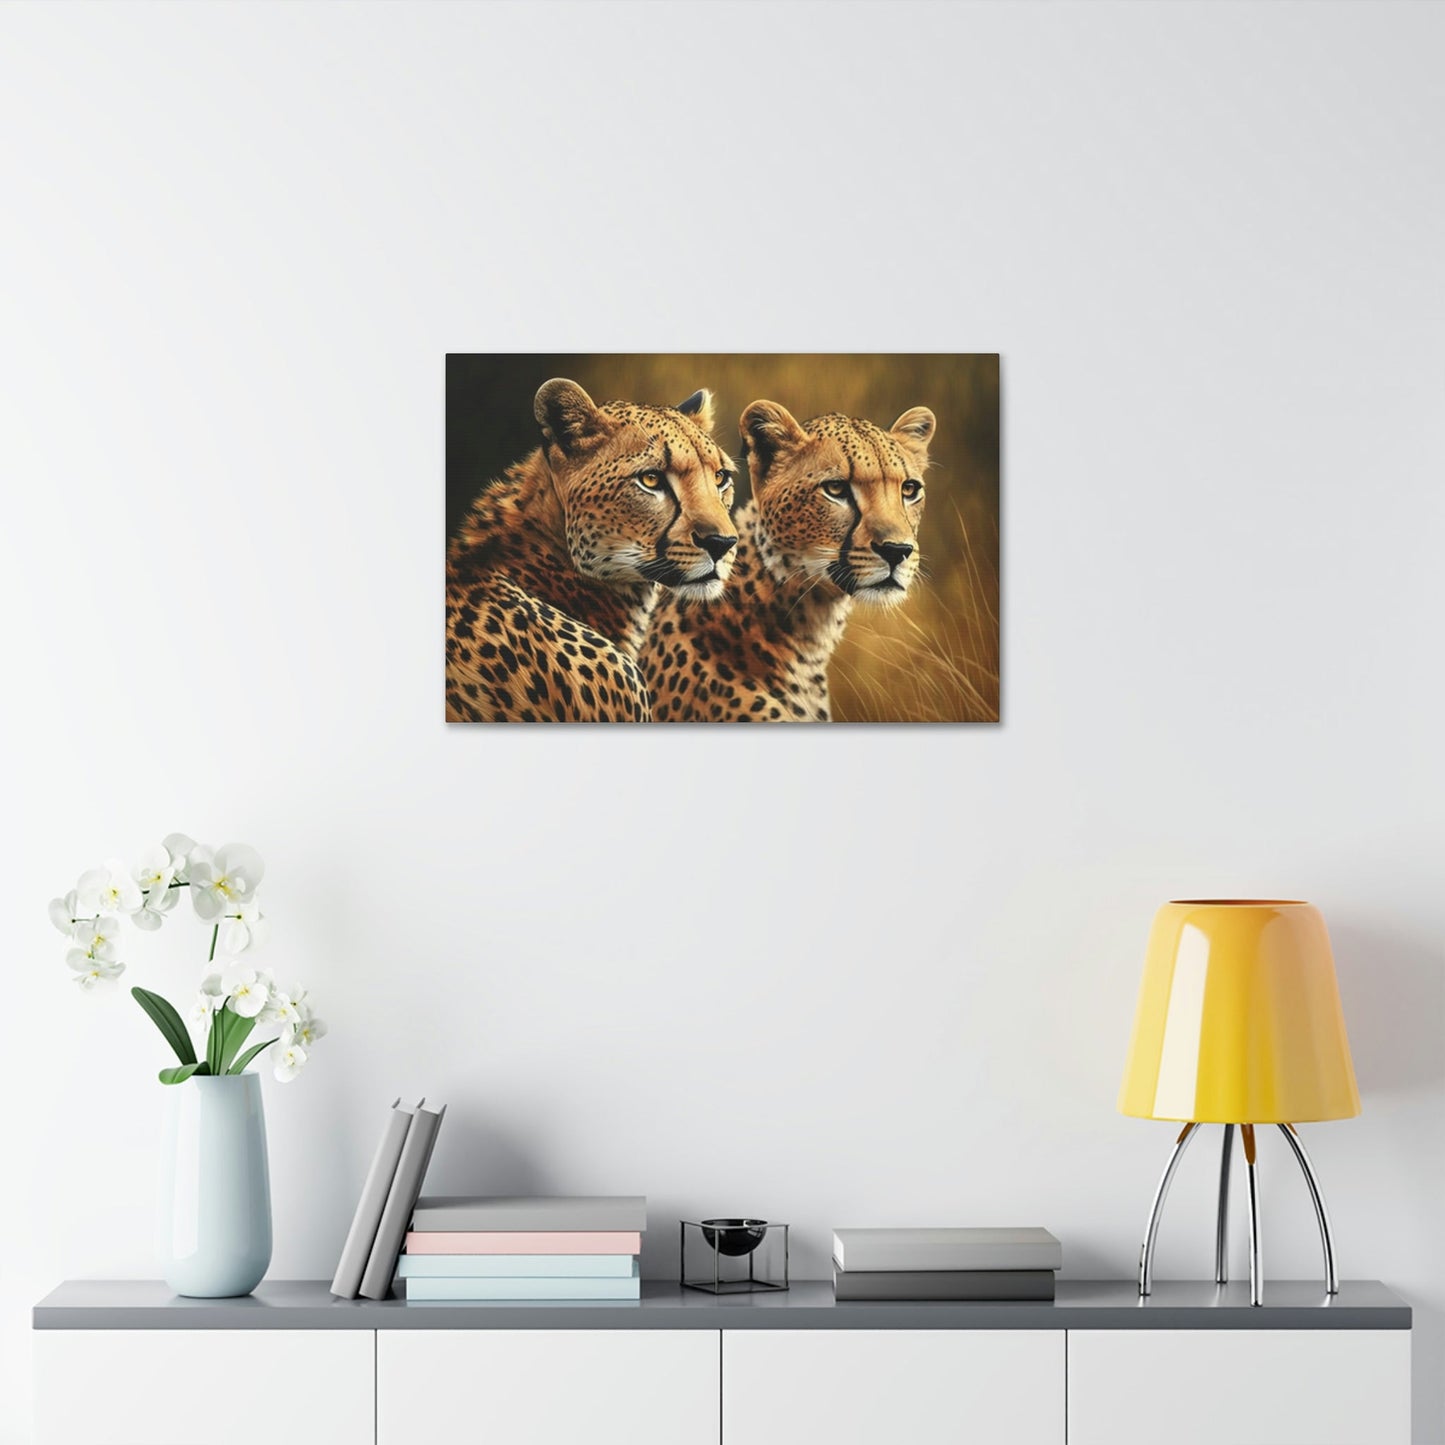 Graceful Predators: Cheetahs on Stunning Wall Art